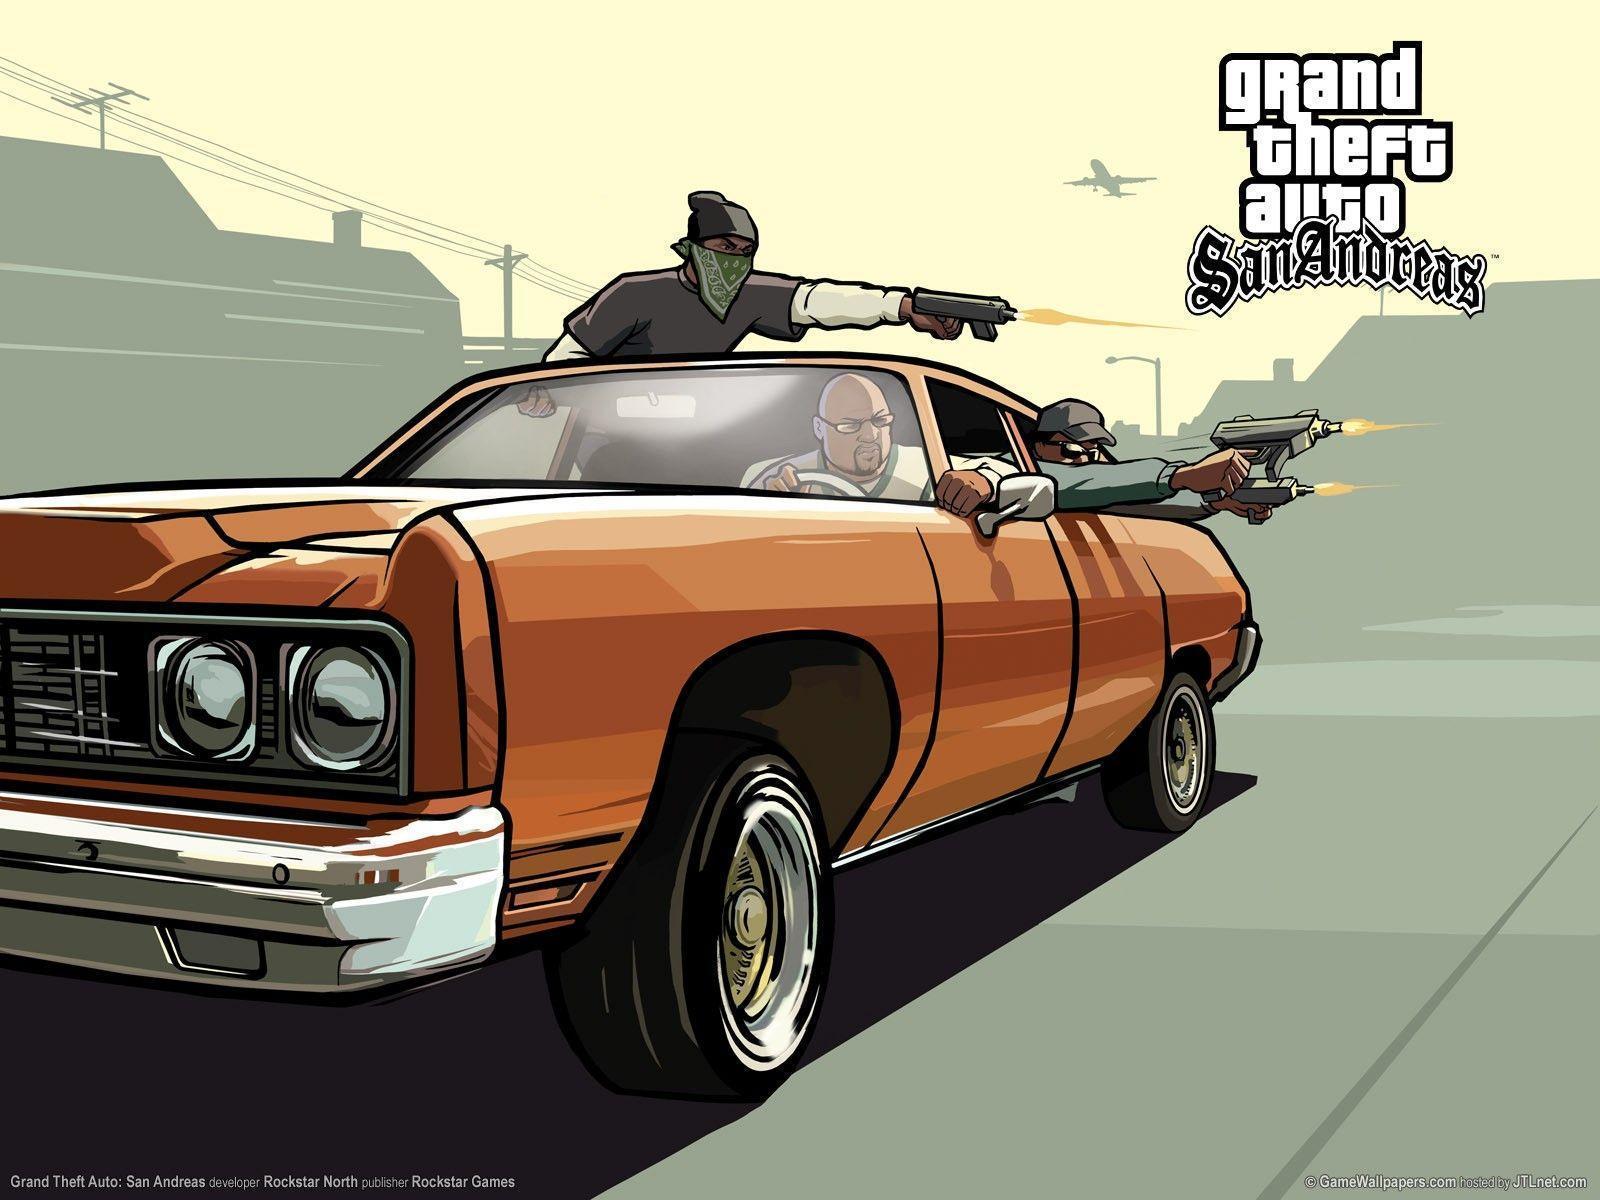 Grand Theft Auto: San Andreas HD Wallpaper. Background